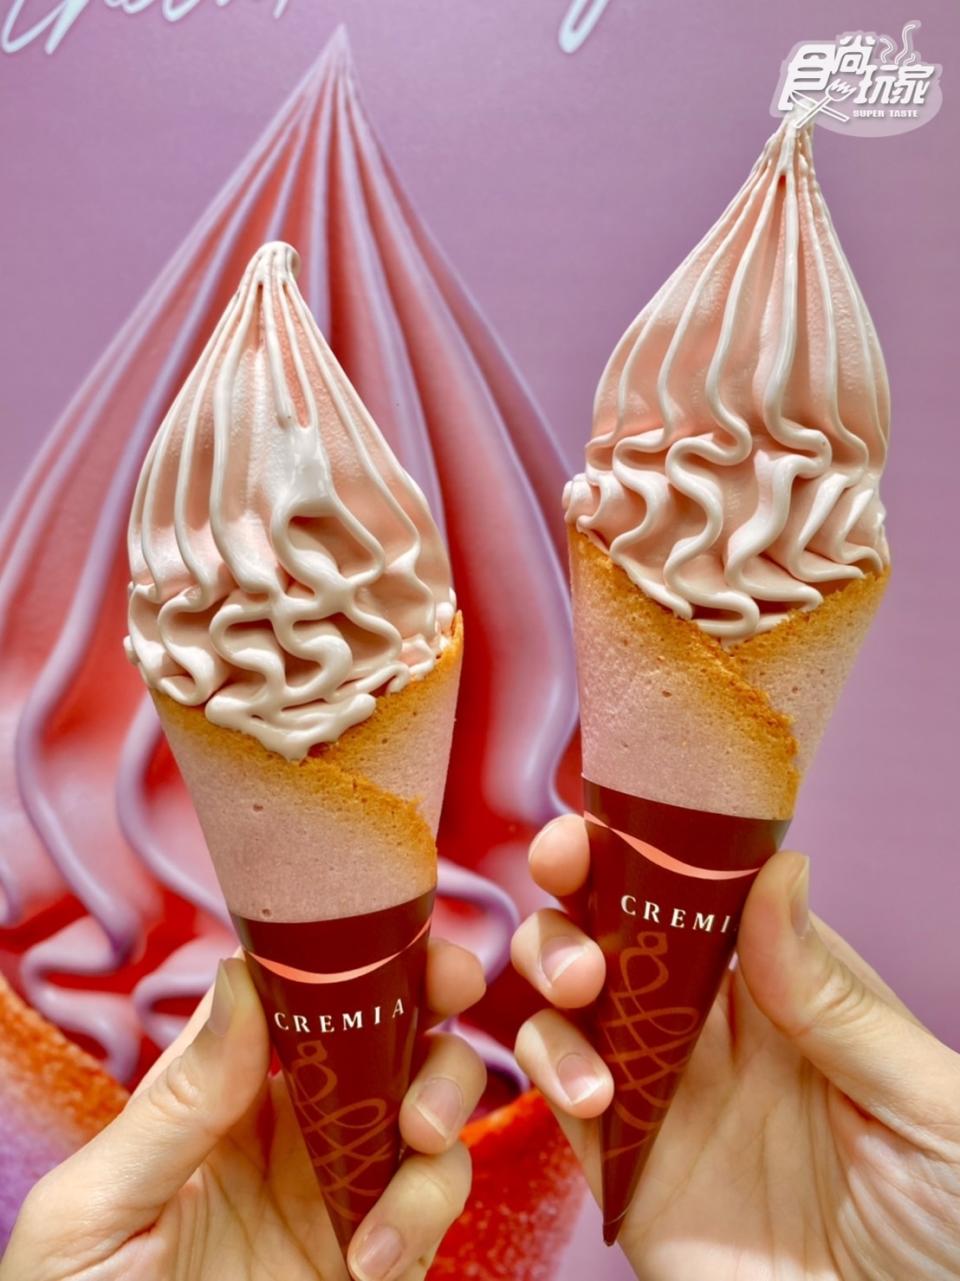 CREMIA霜淇淋有草莓口味了！「福岡甘王草莓」台灣獨家有，粉嫩香甜吃爆